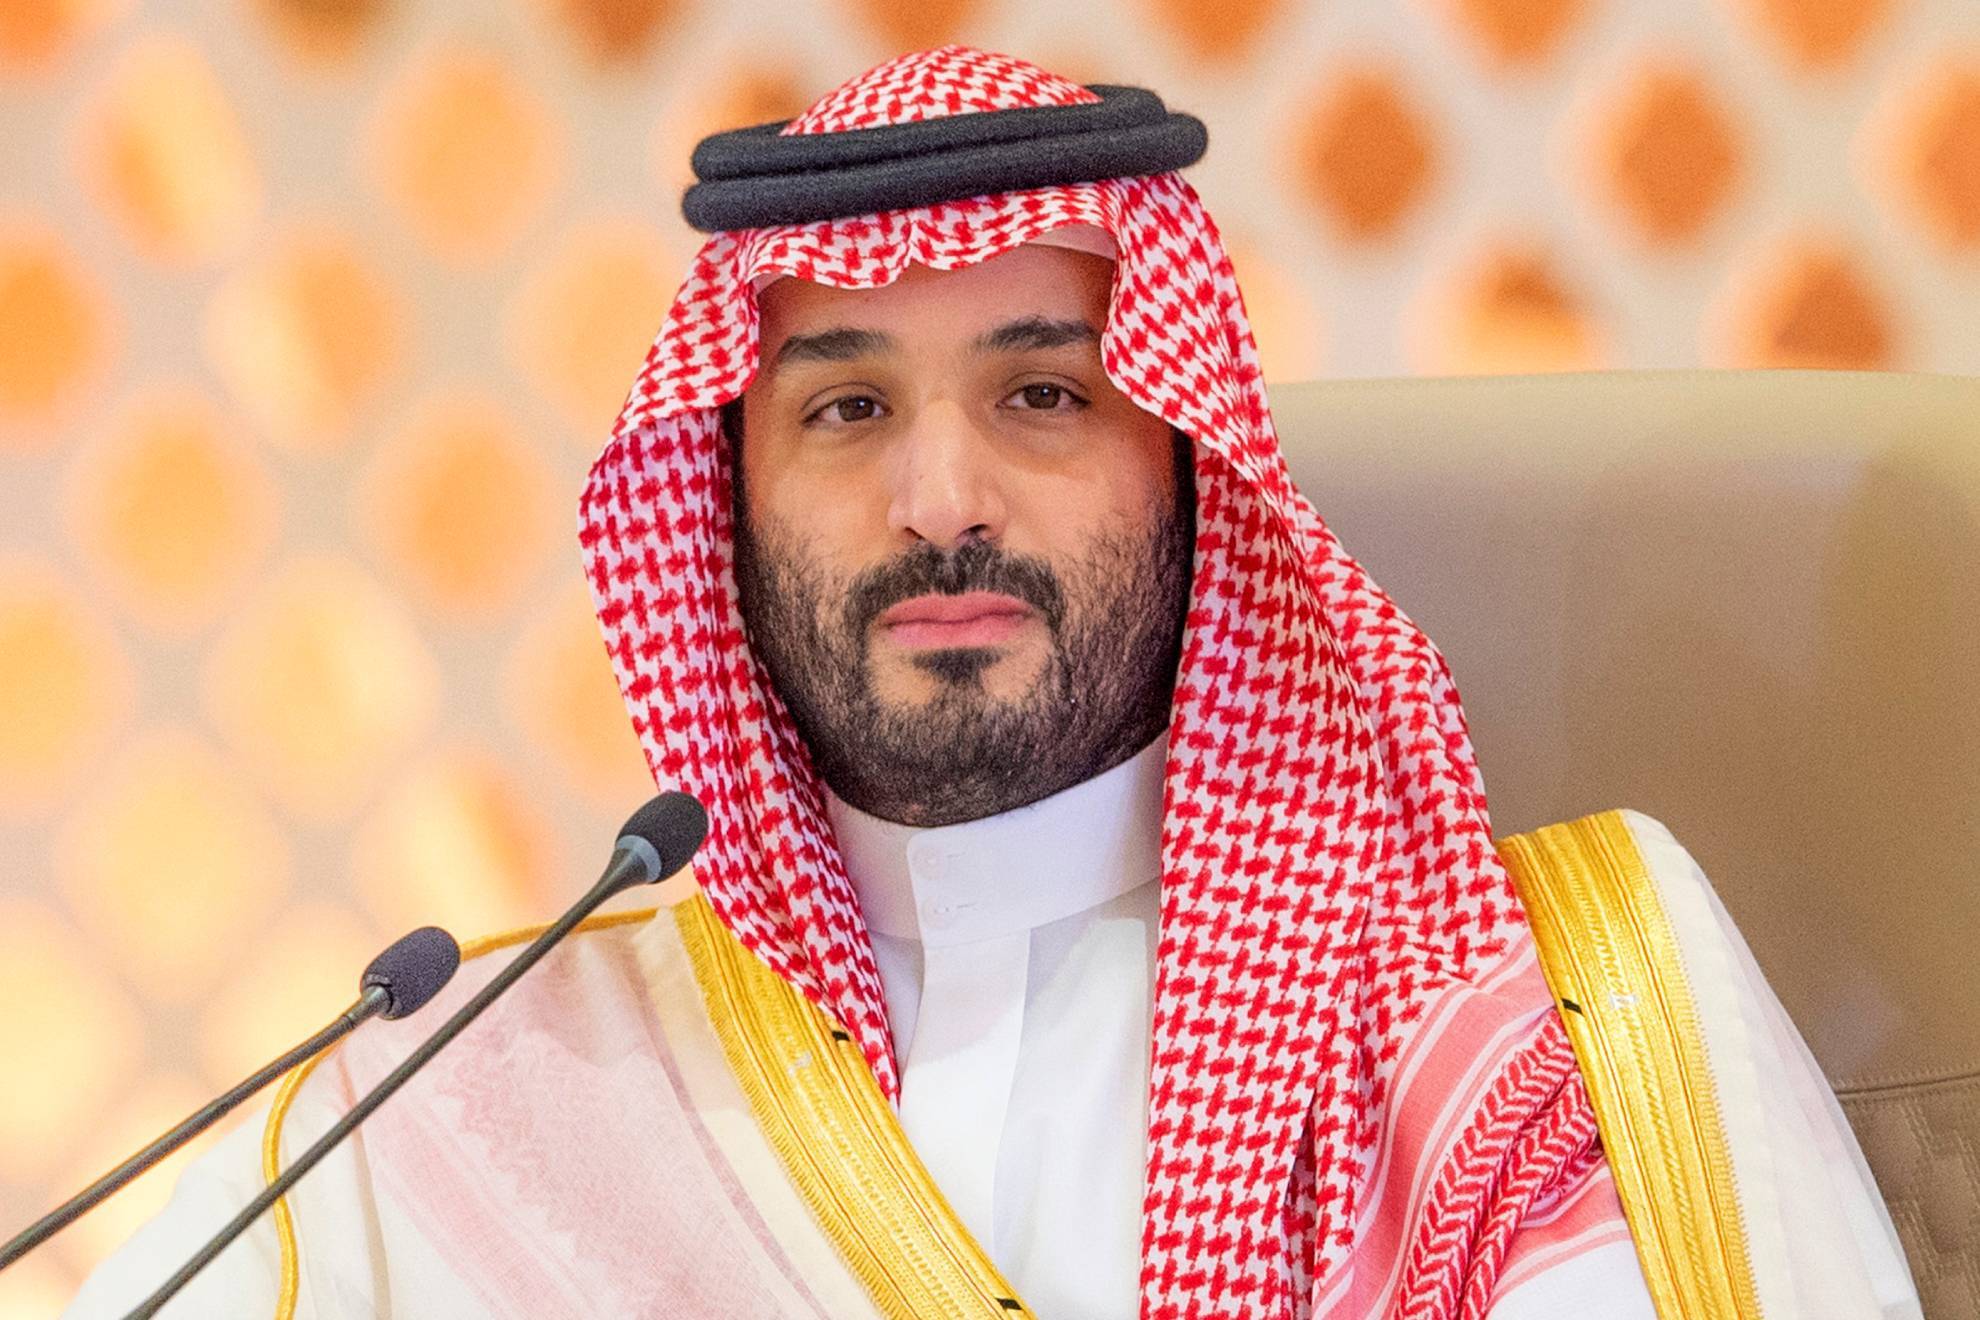 El príncipe de Arabia Saudí, Mohammed bin Salman. LaPresse